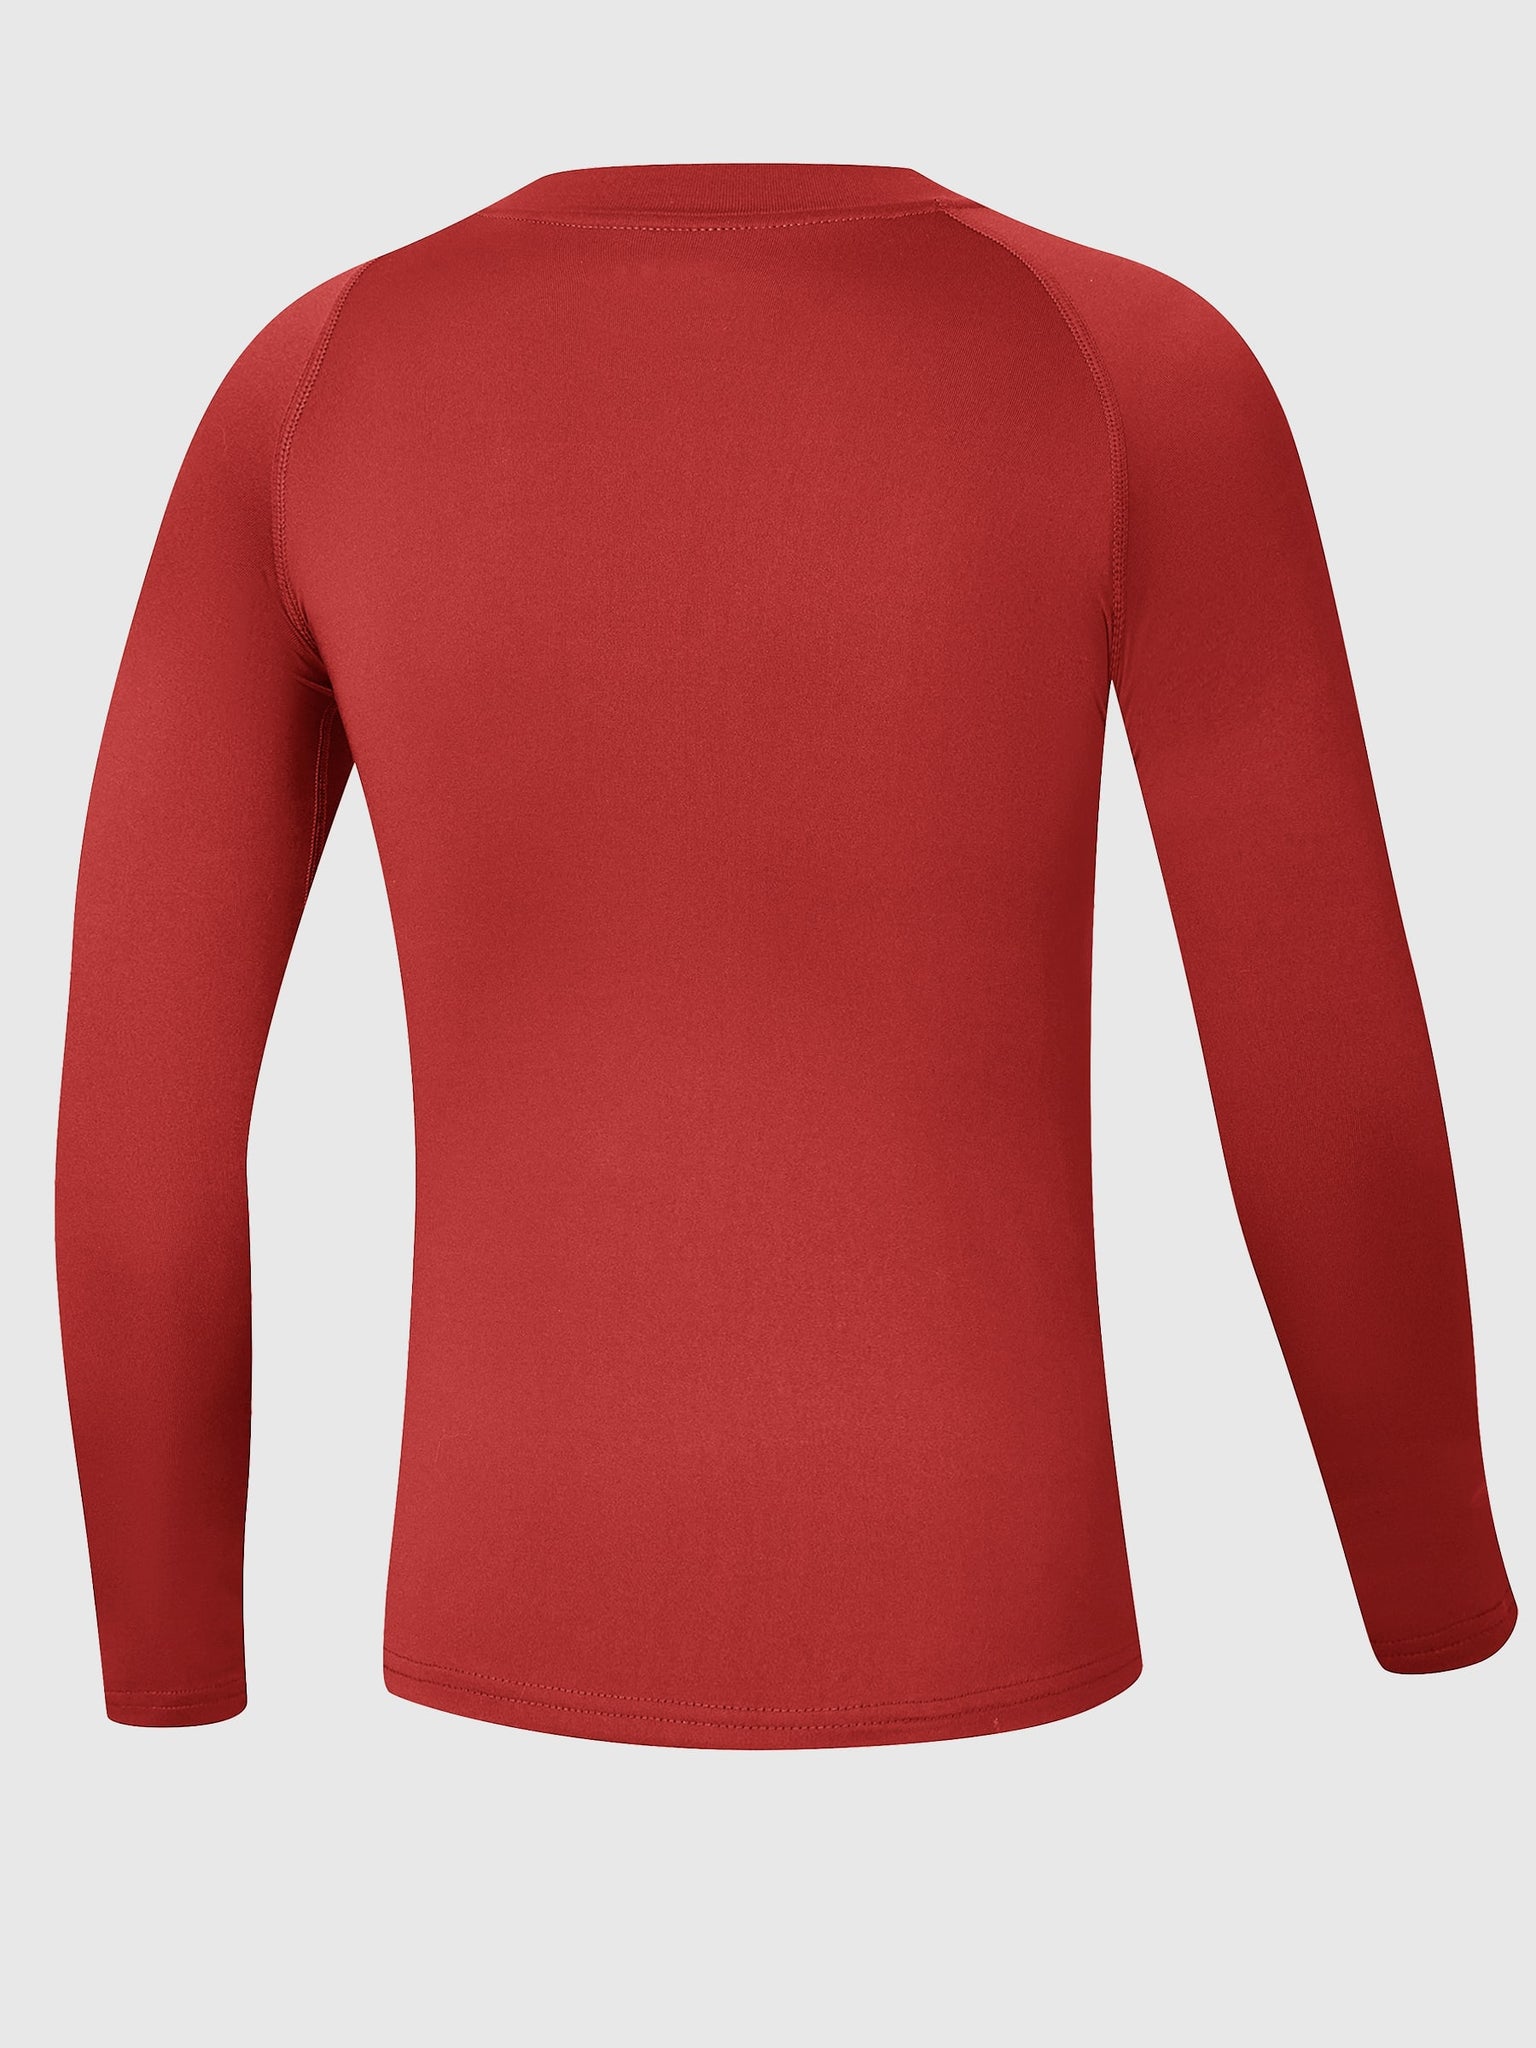 Boys Thermal Fleece Long-Sleeve Shirt_Red4